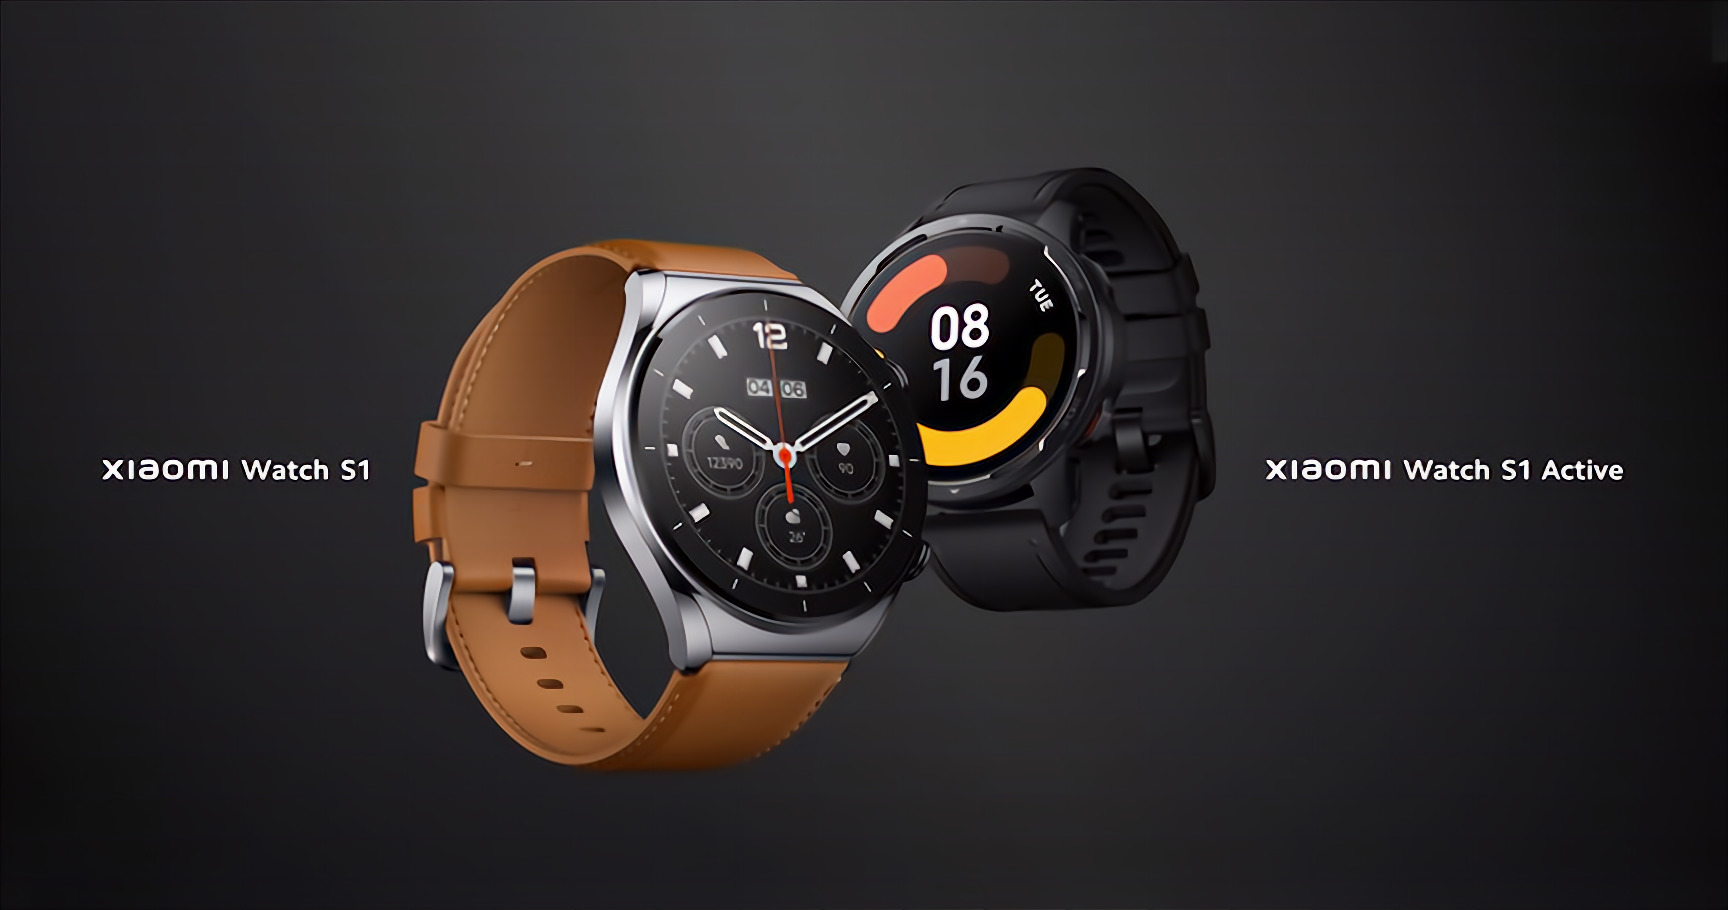 Xiaomi t2 часы. Xiaomi watch s1 и s1 Active. Смарт часы Xiaomi s1. Смарт часы Ксиаоми вотч s1 Актив. Часы Xiaomi watch s1 Active.